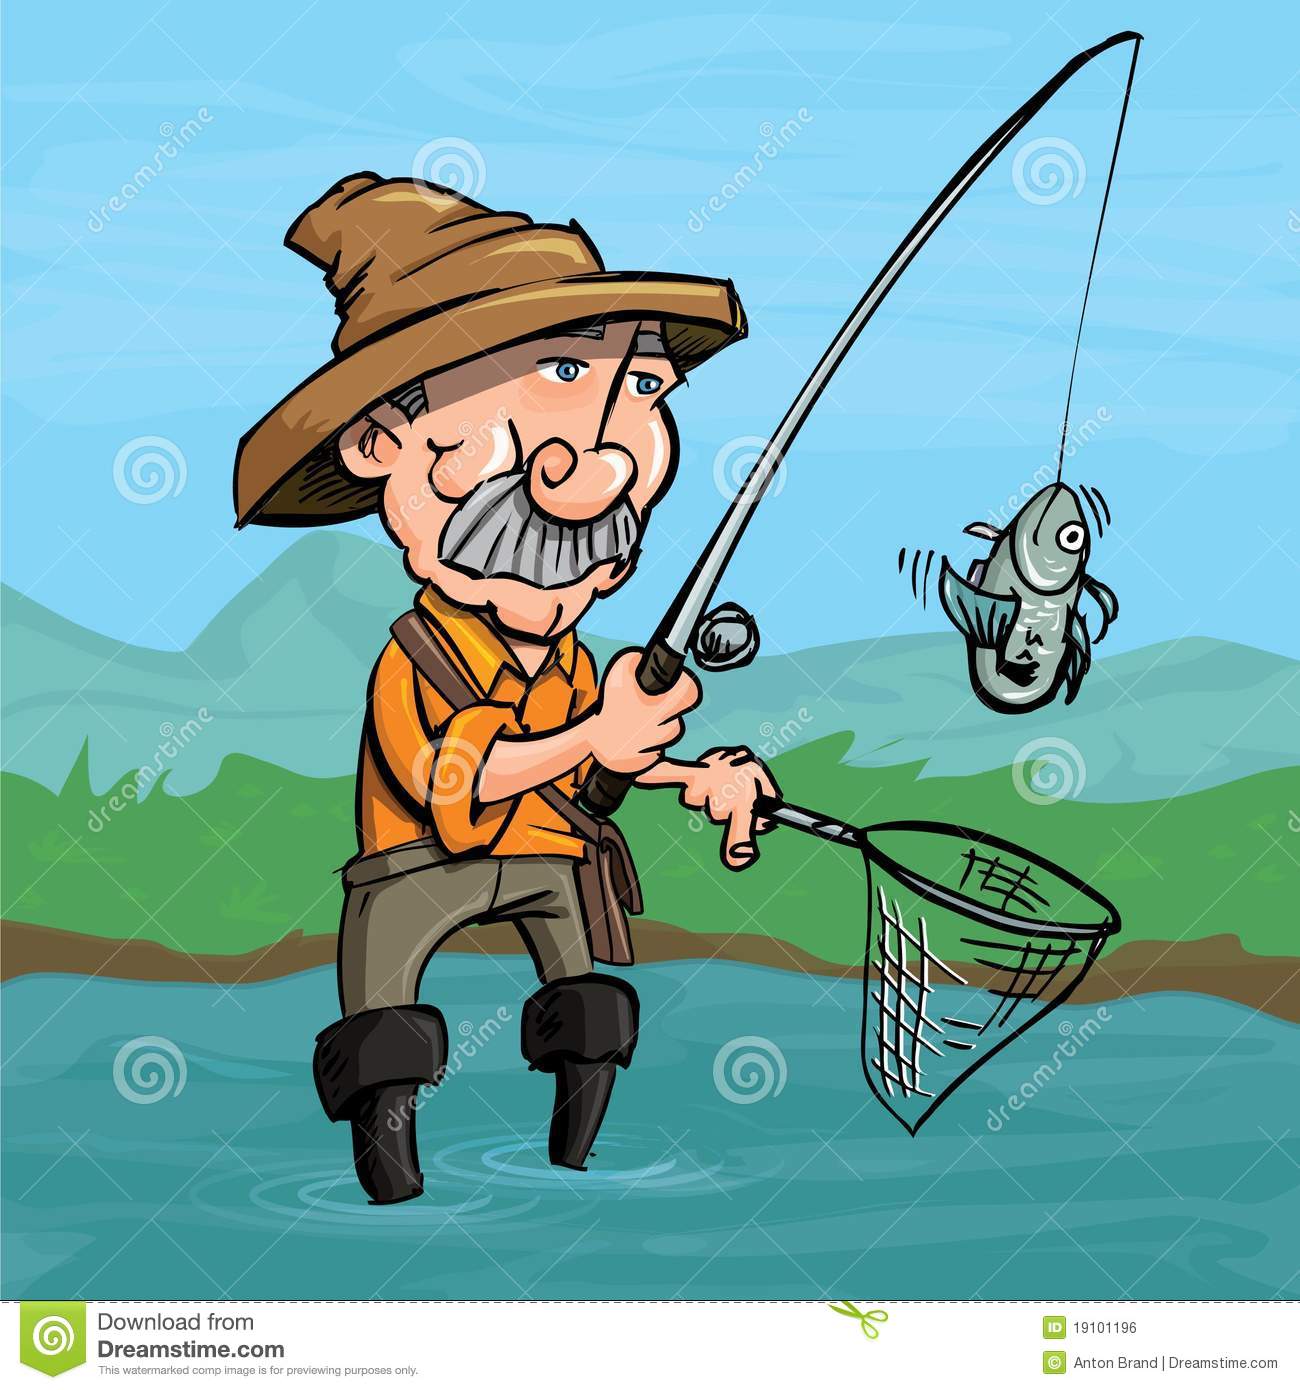 Cartoon Fisherman Catching A Fish Royalty Free Stock Image   Image